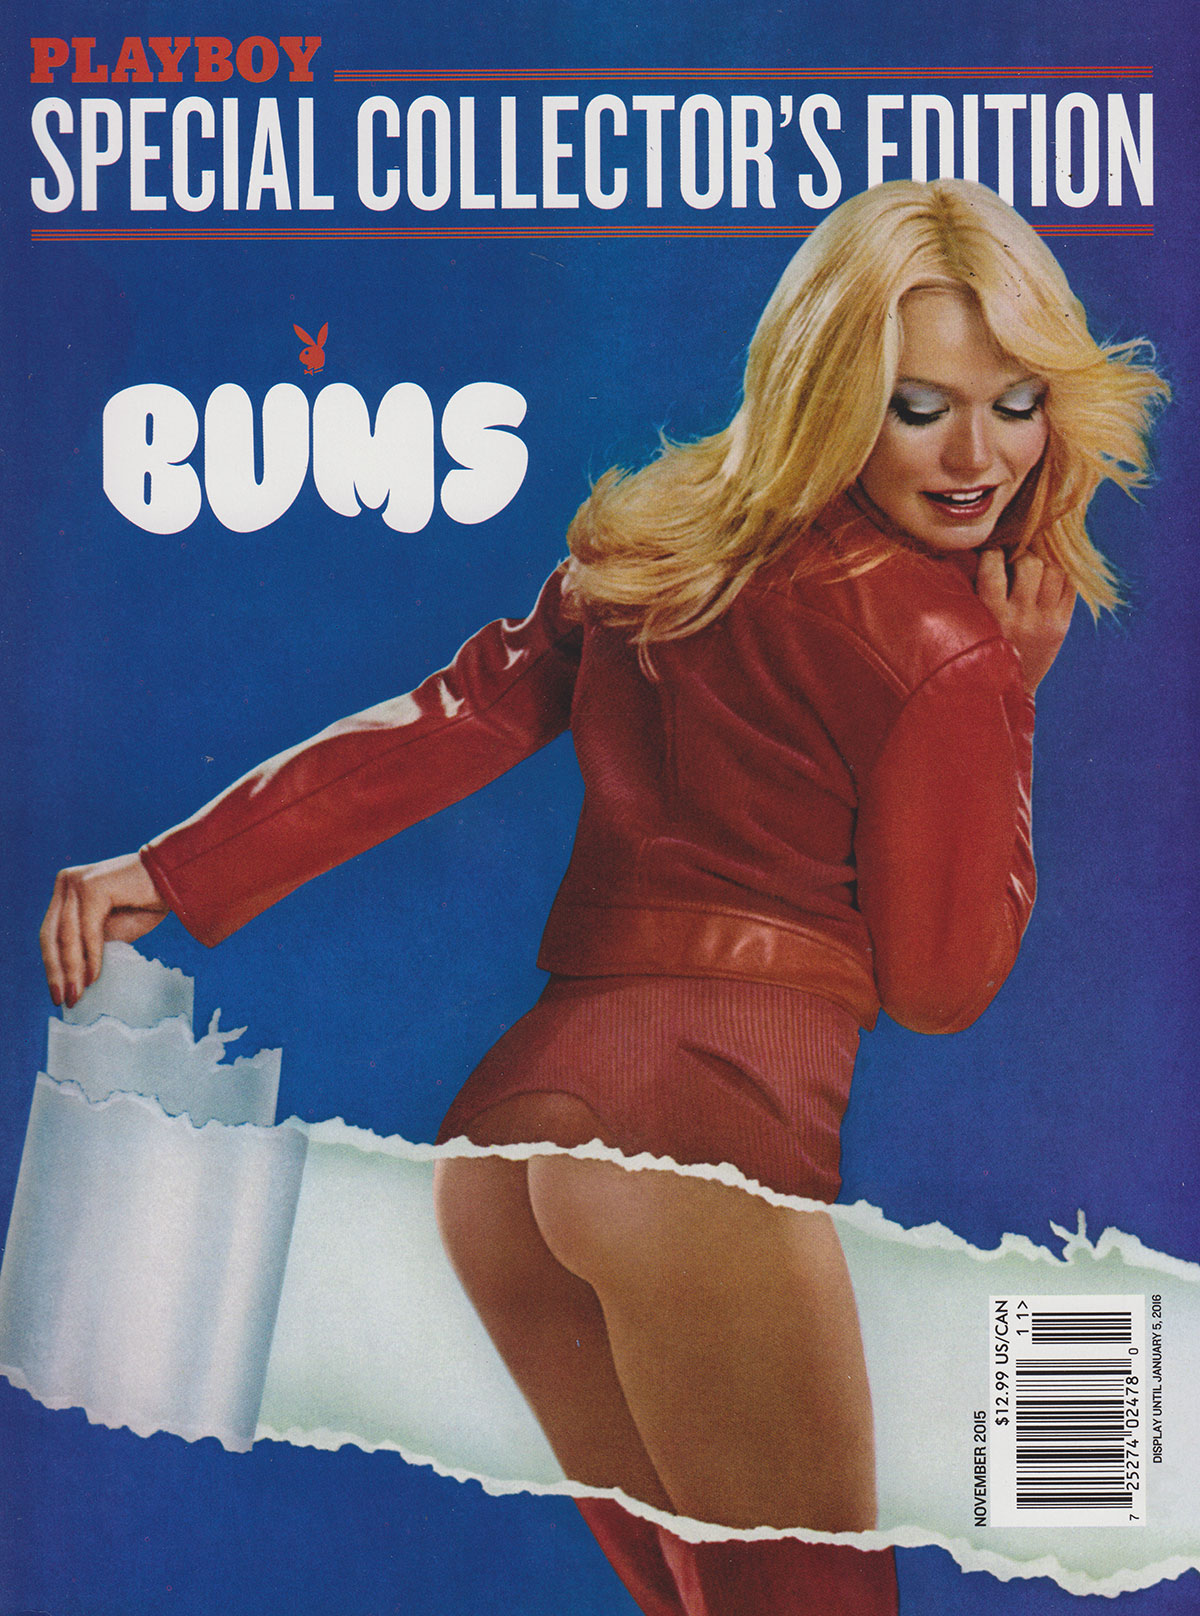 Playboy Special Collector's Edition November 2015 - Bums magazine back issue Playboy Special Collector's Edition magizine back copy 